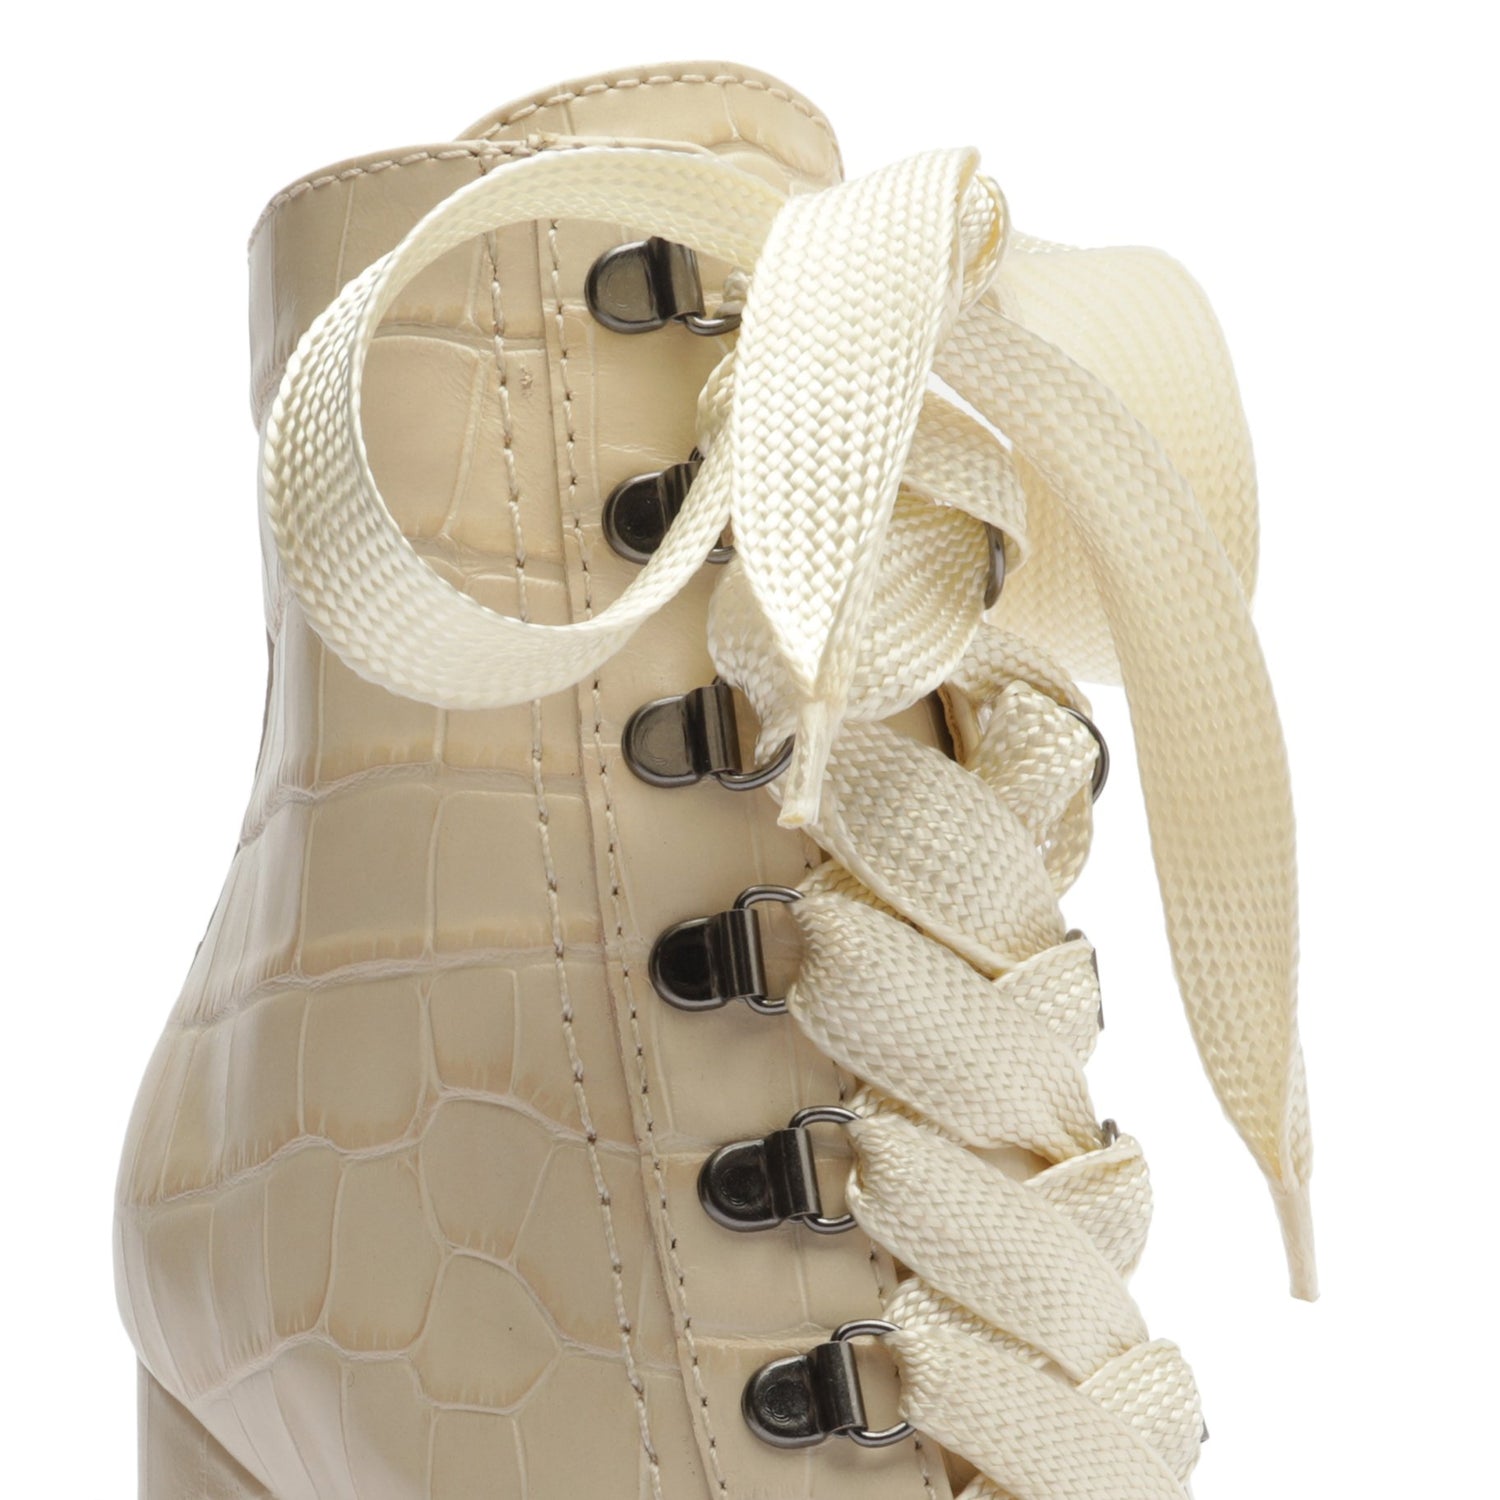 Louis Vuitton Tricolor Patent Leather Ankle Cuff Flat Sandals Size 39